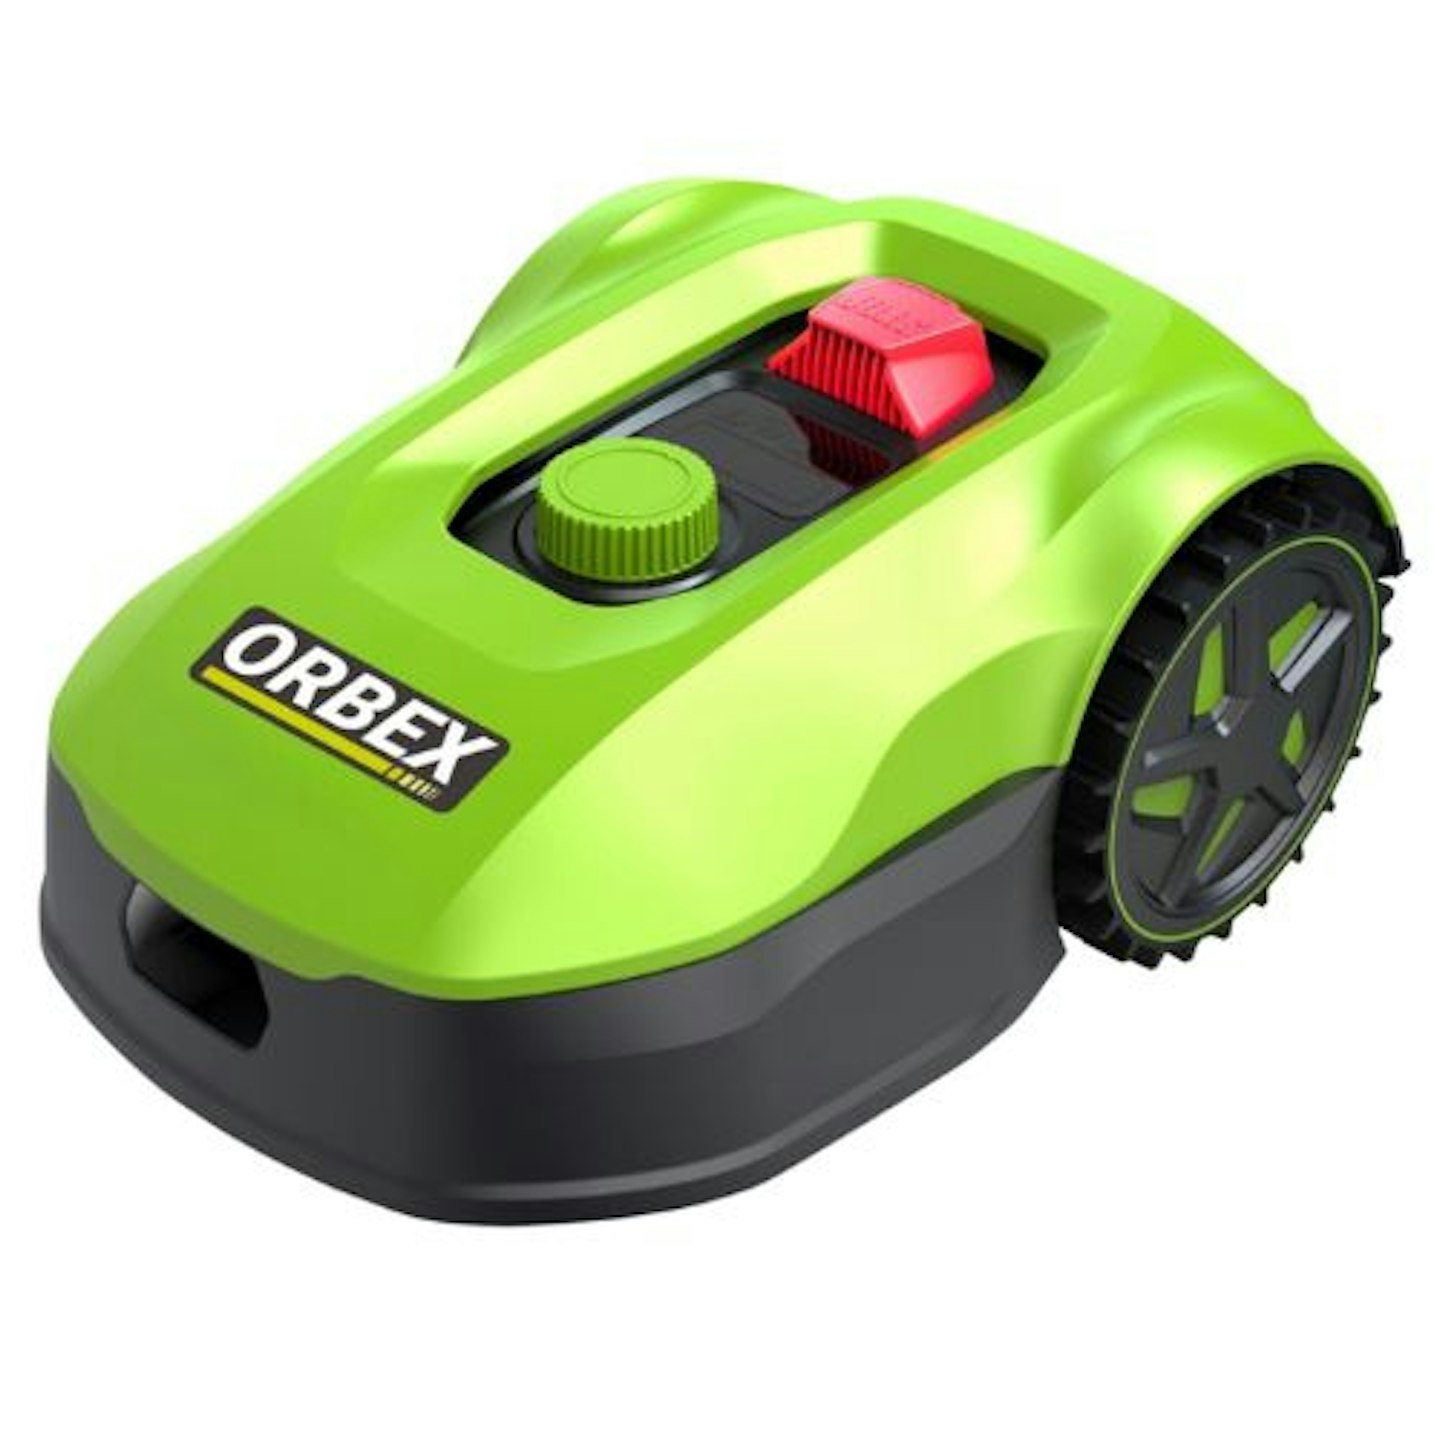 Orbex S700G Robotic Lawnmower/Self-Propelled Cordless Lawnmower/Bluetooth & WiFi Connection/with Rain Sensor